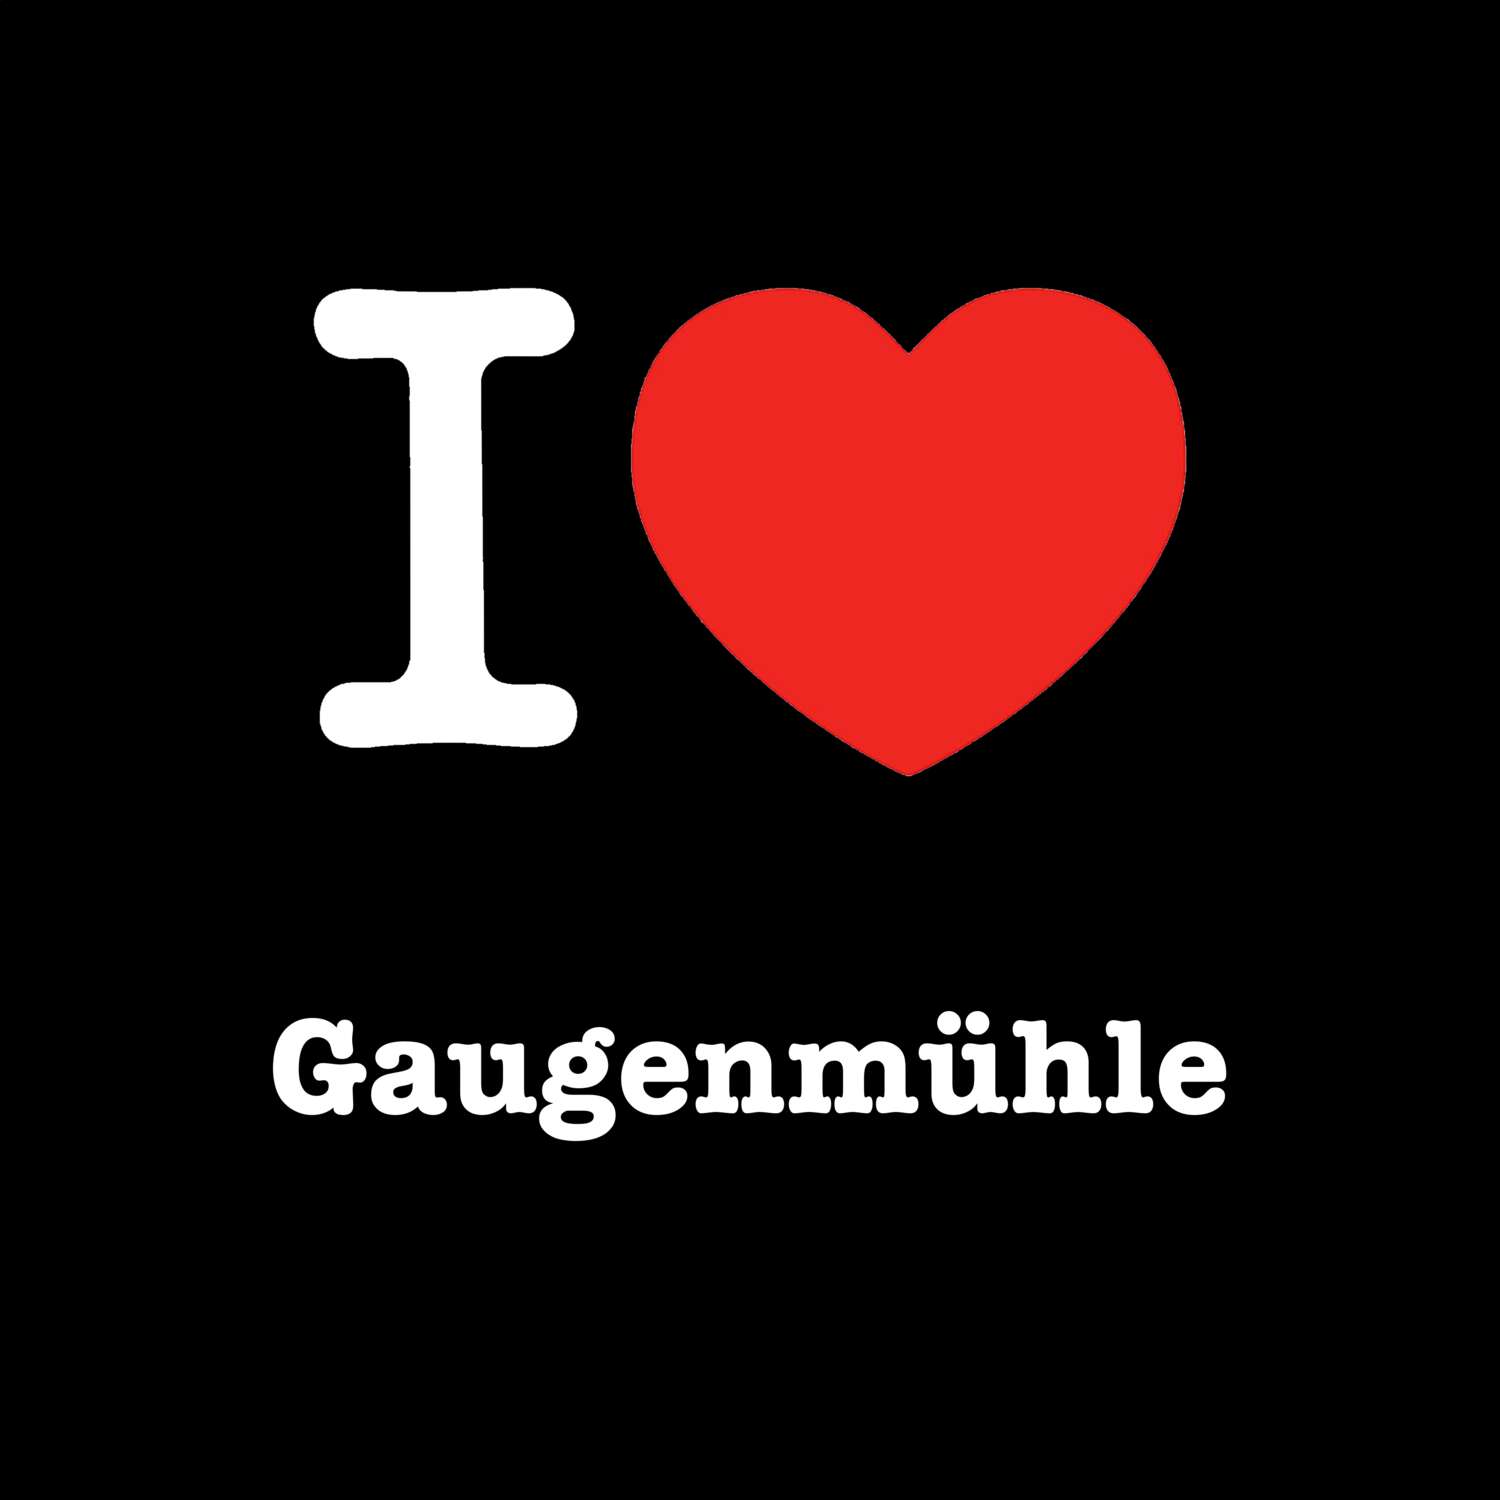 Gaugenmühle T-Shirt »I love«